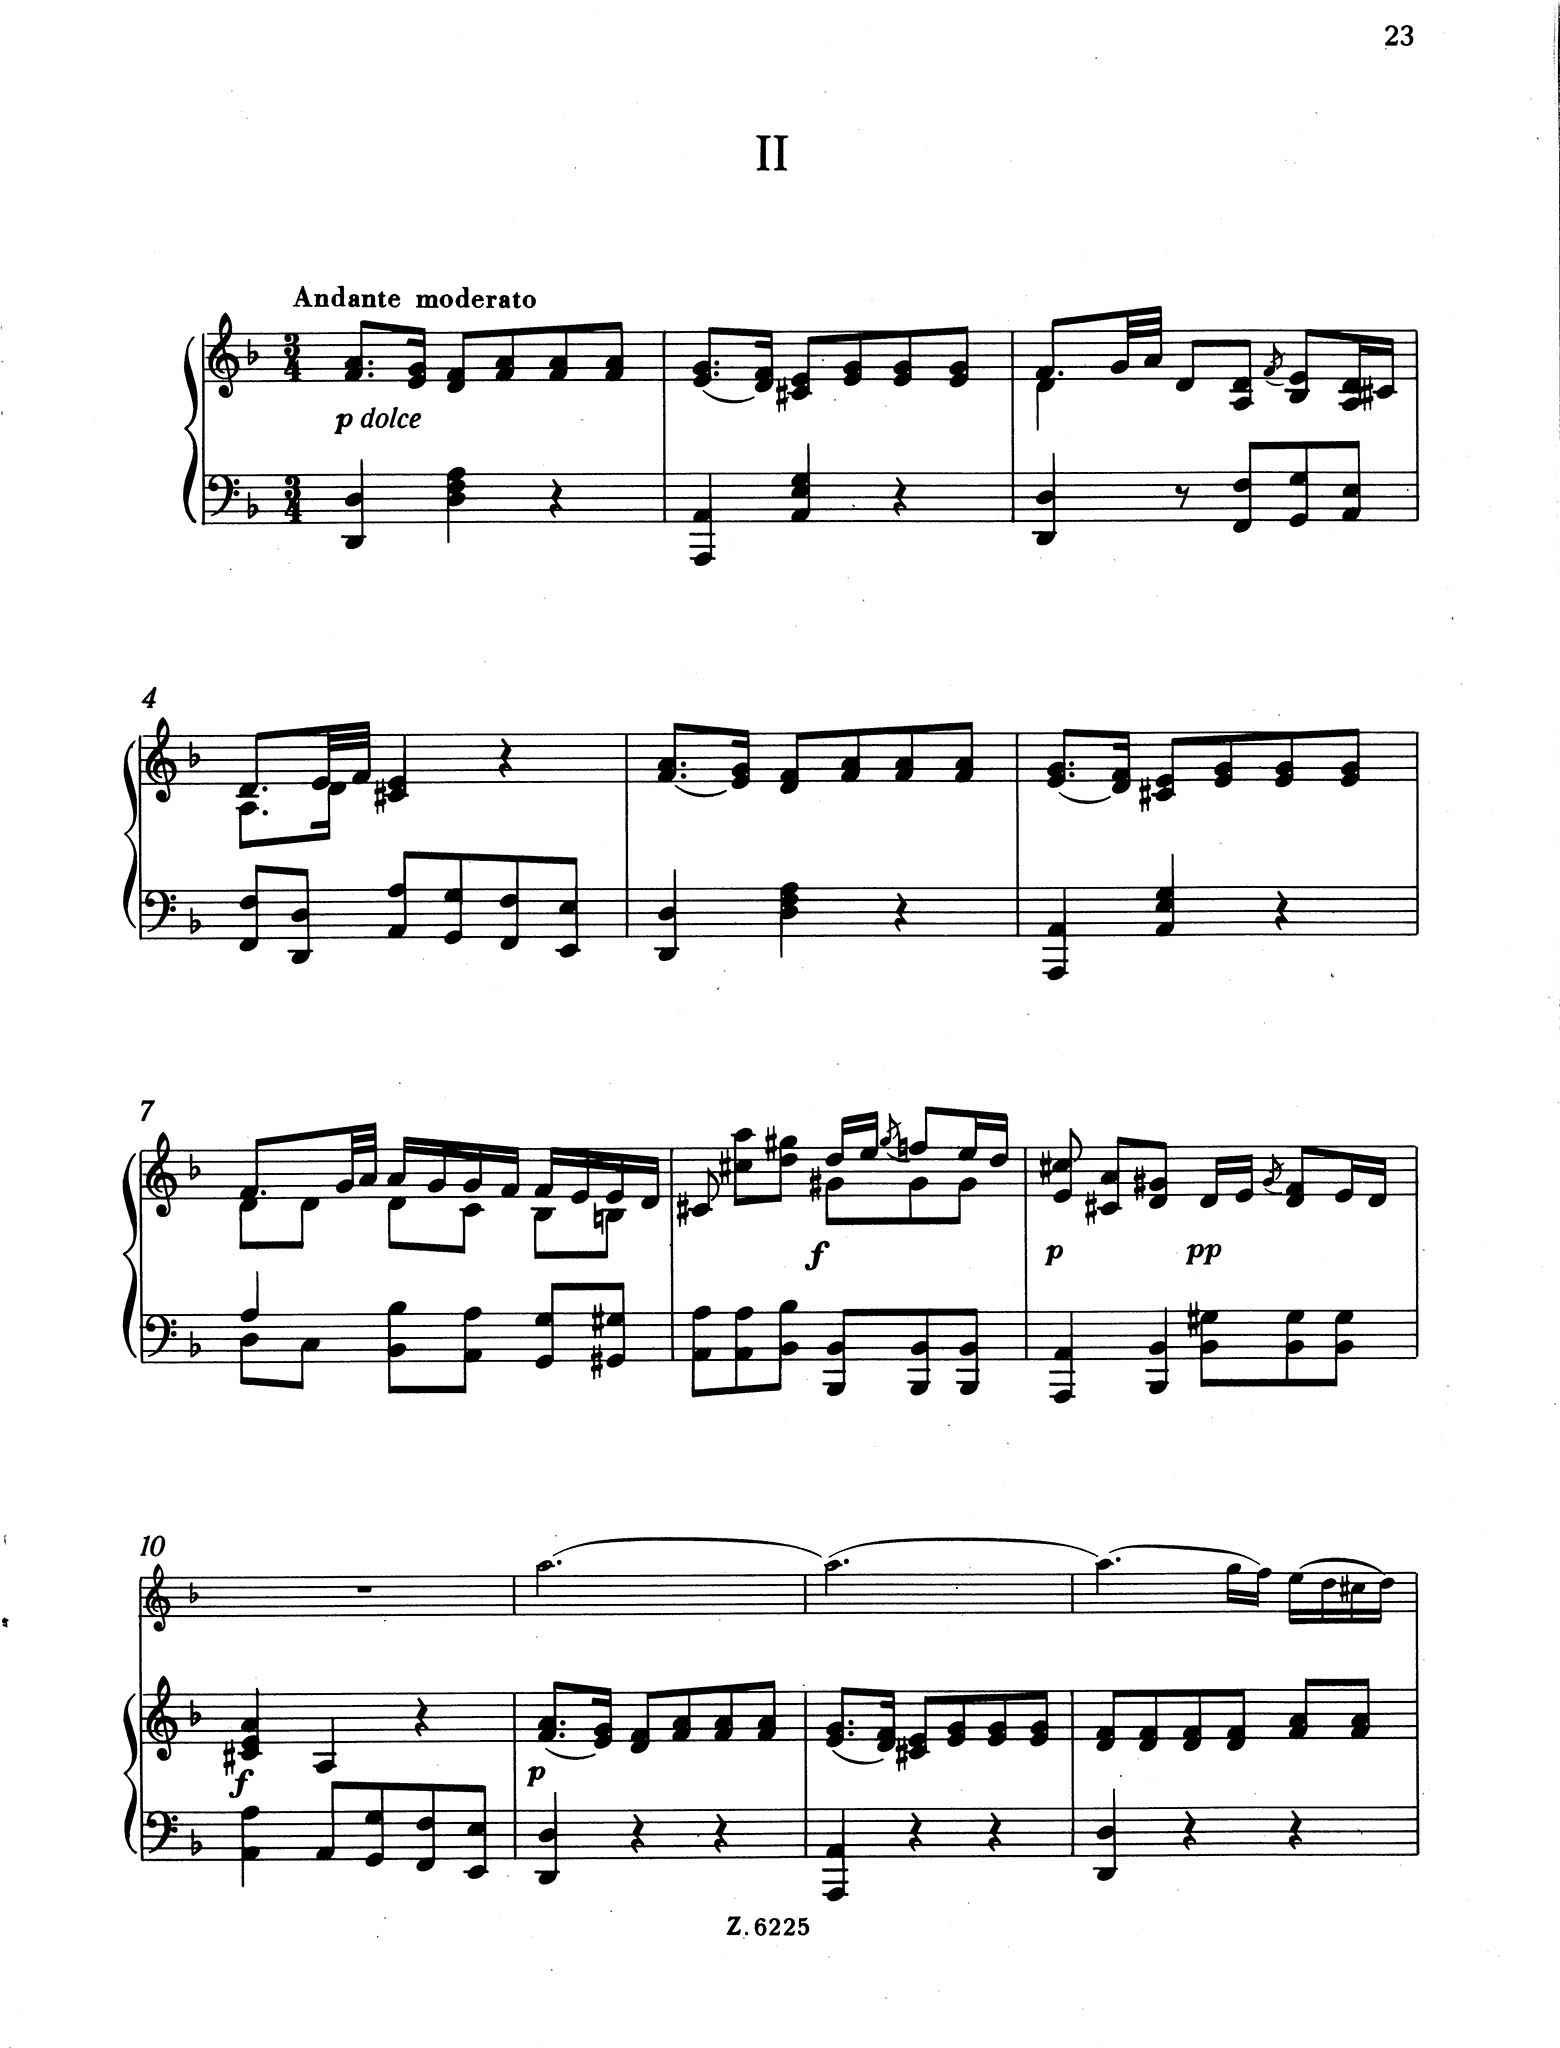 Clarinet Concerto No. 1 (Kaiser) in F Major - Movement 2